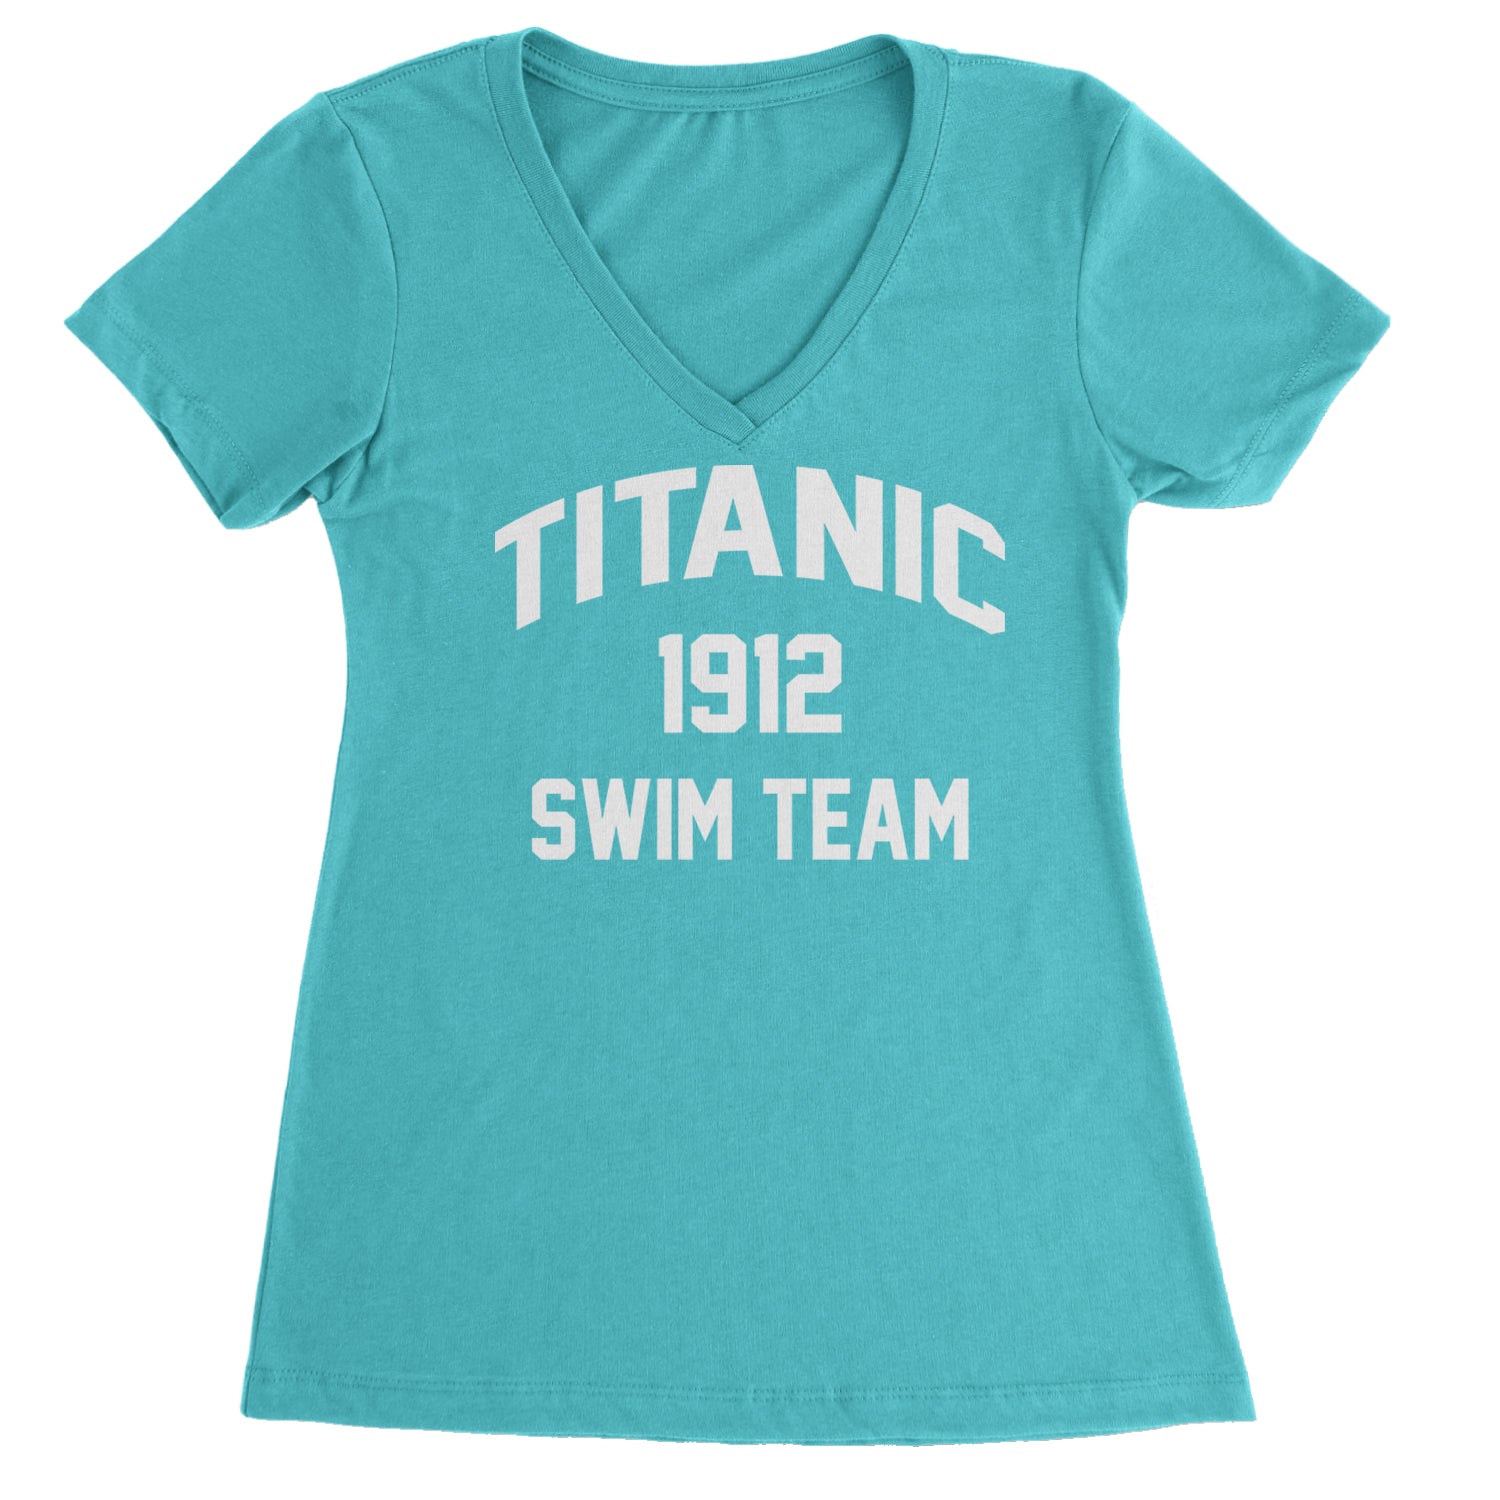 Titanic Swim Team 1912 Funny Cruise Ladies V-Neck T-shirt Surf